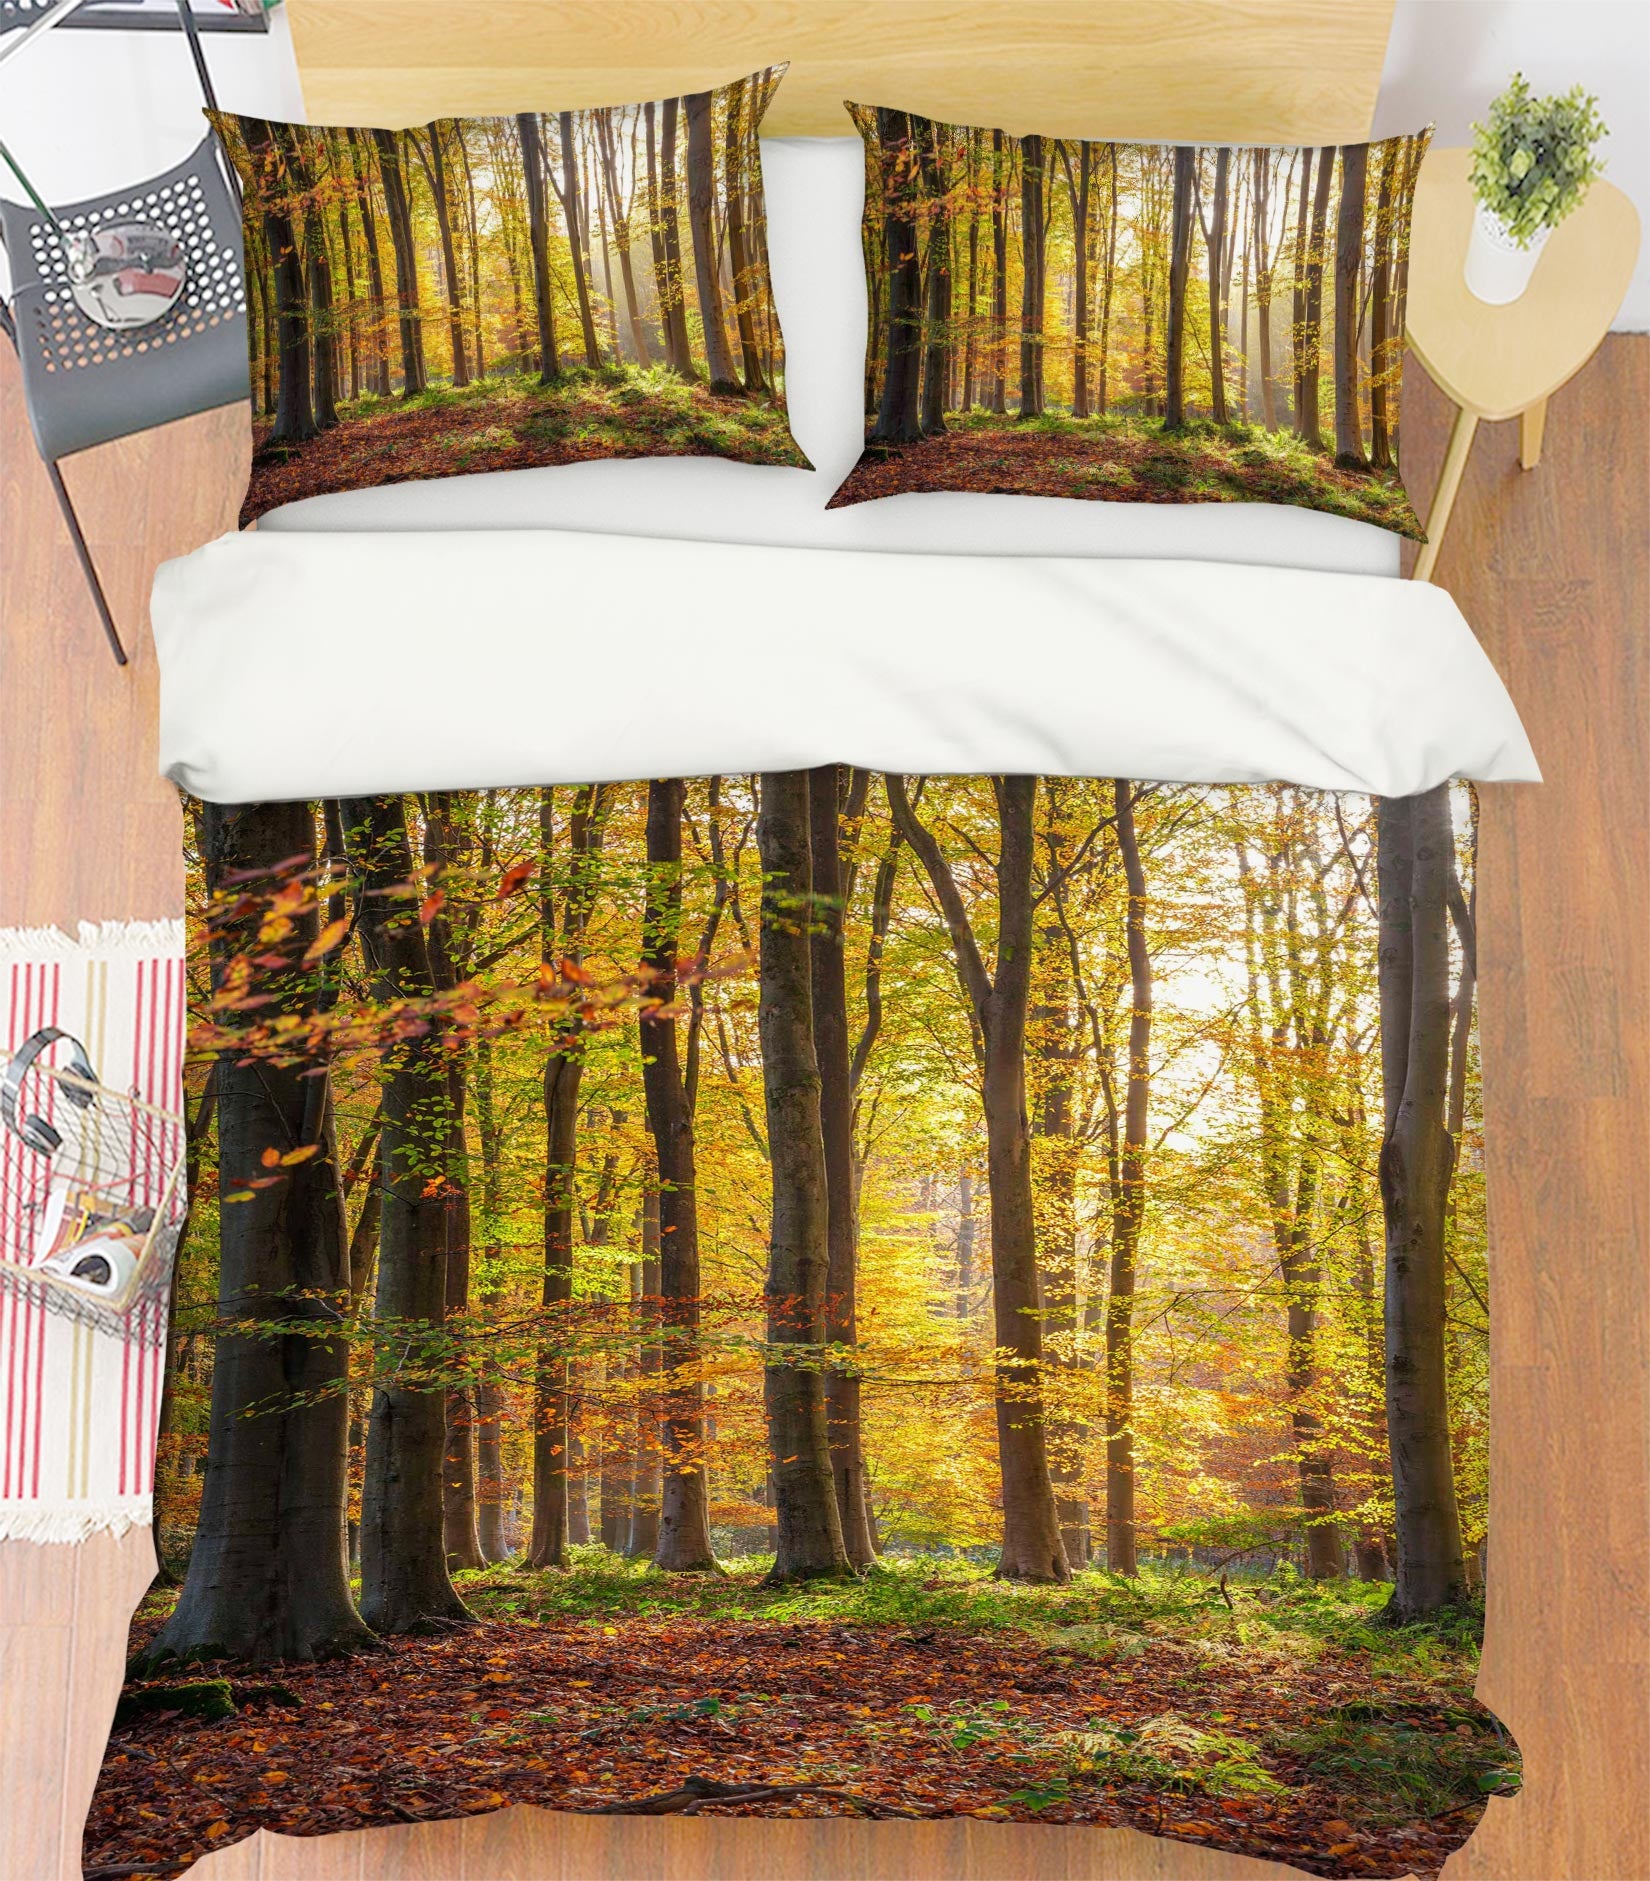 3D Forest Leaves 7013 Assaf Frank Bedding Bed Pillowcases Quilt Cover Duvet Cover